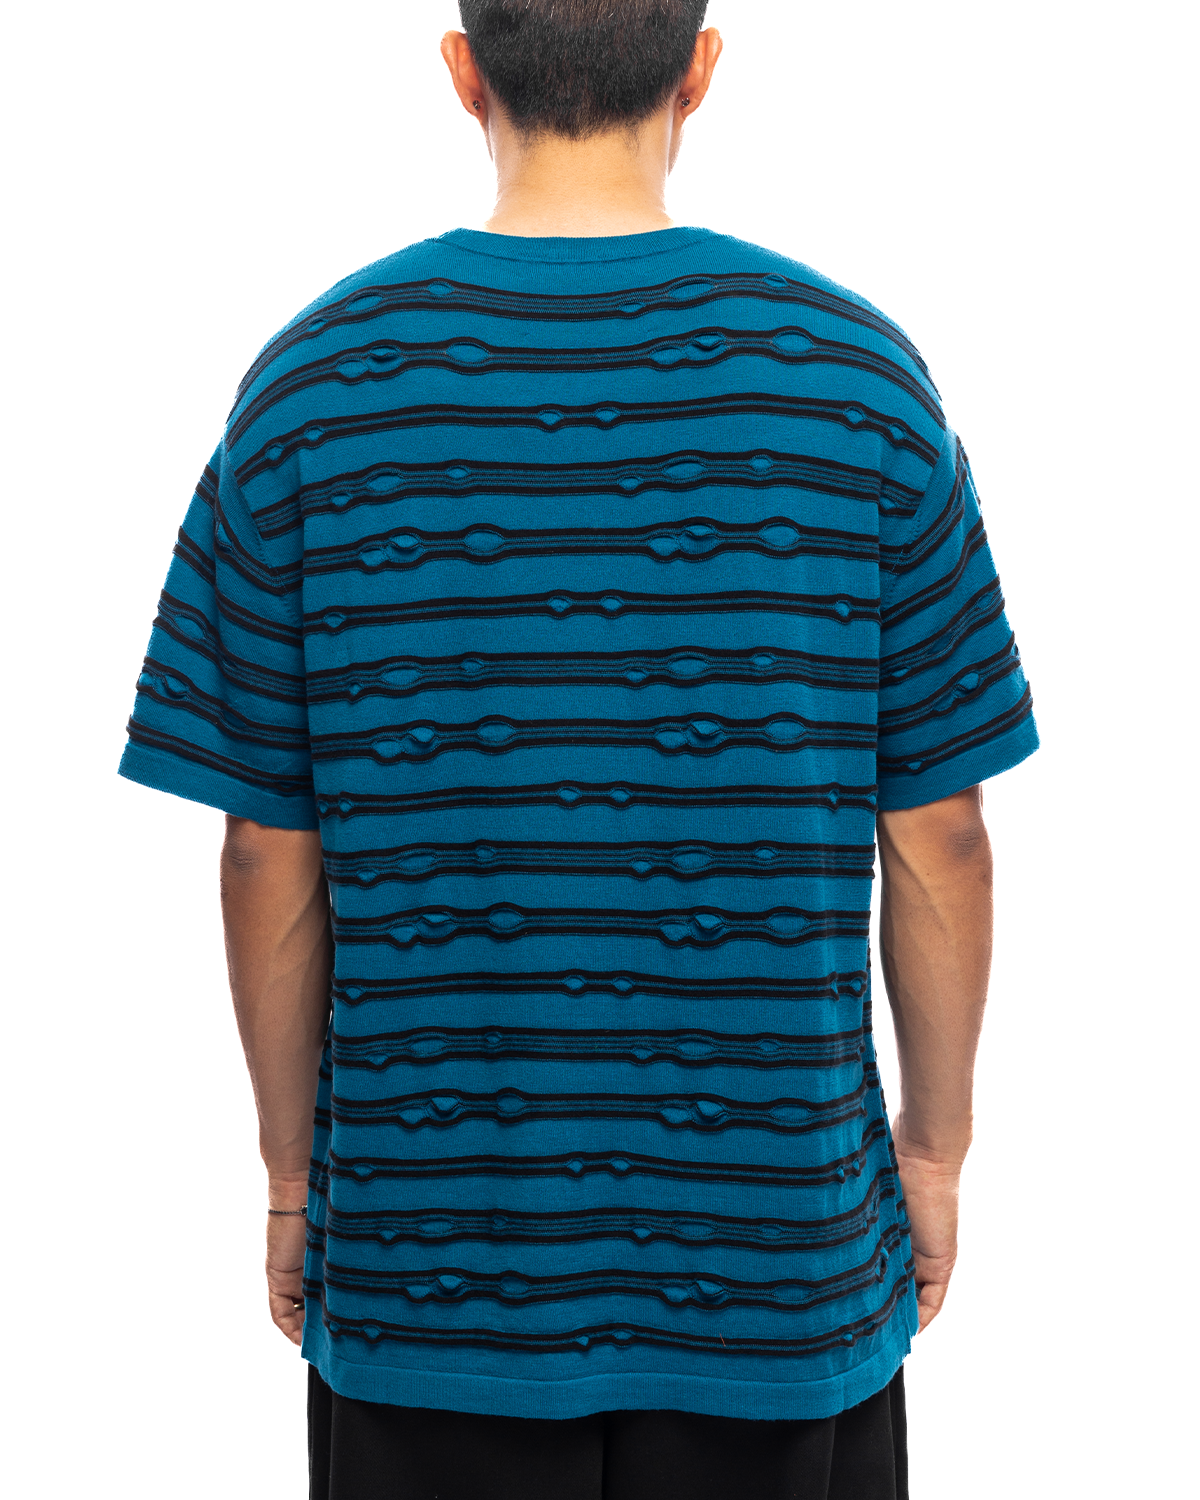 Puckered Striped T-shirt Teal